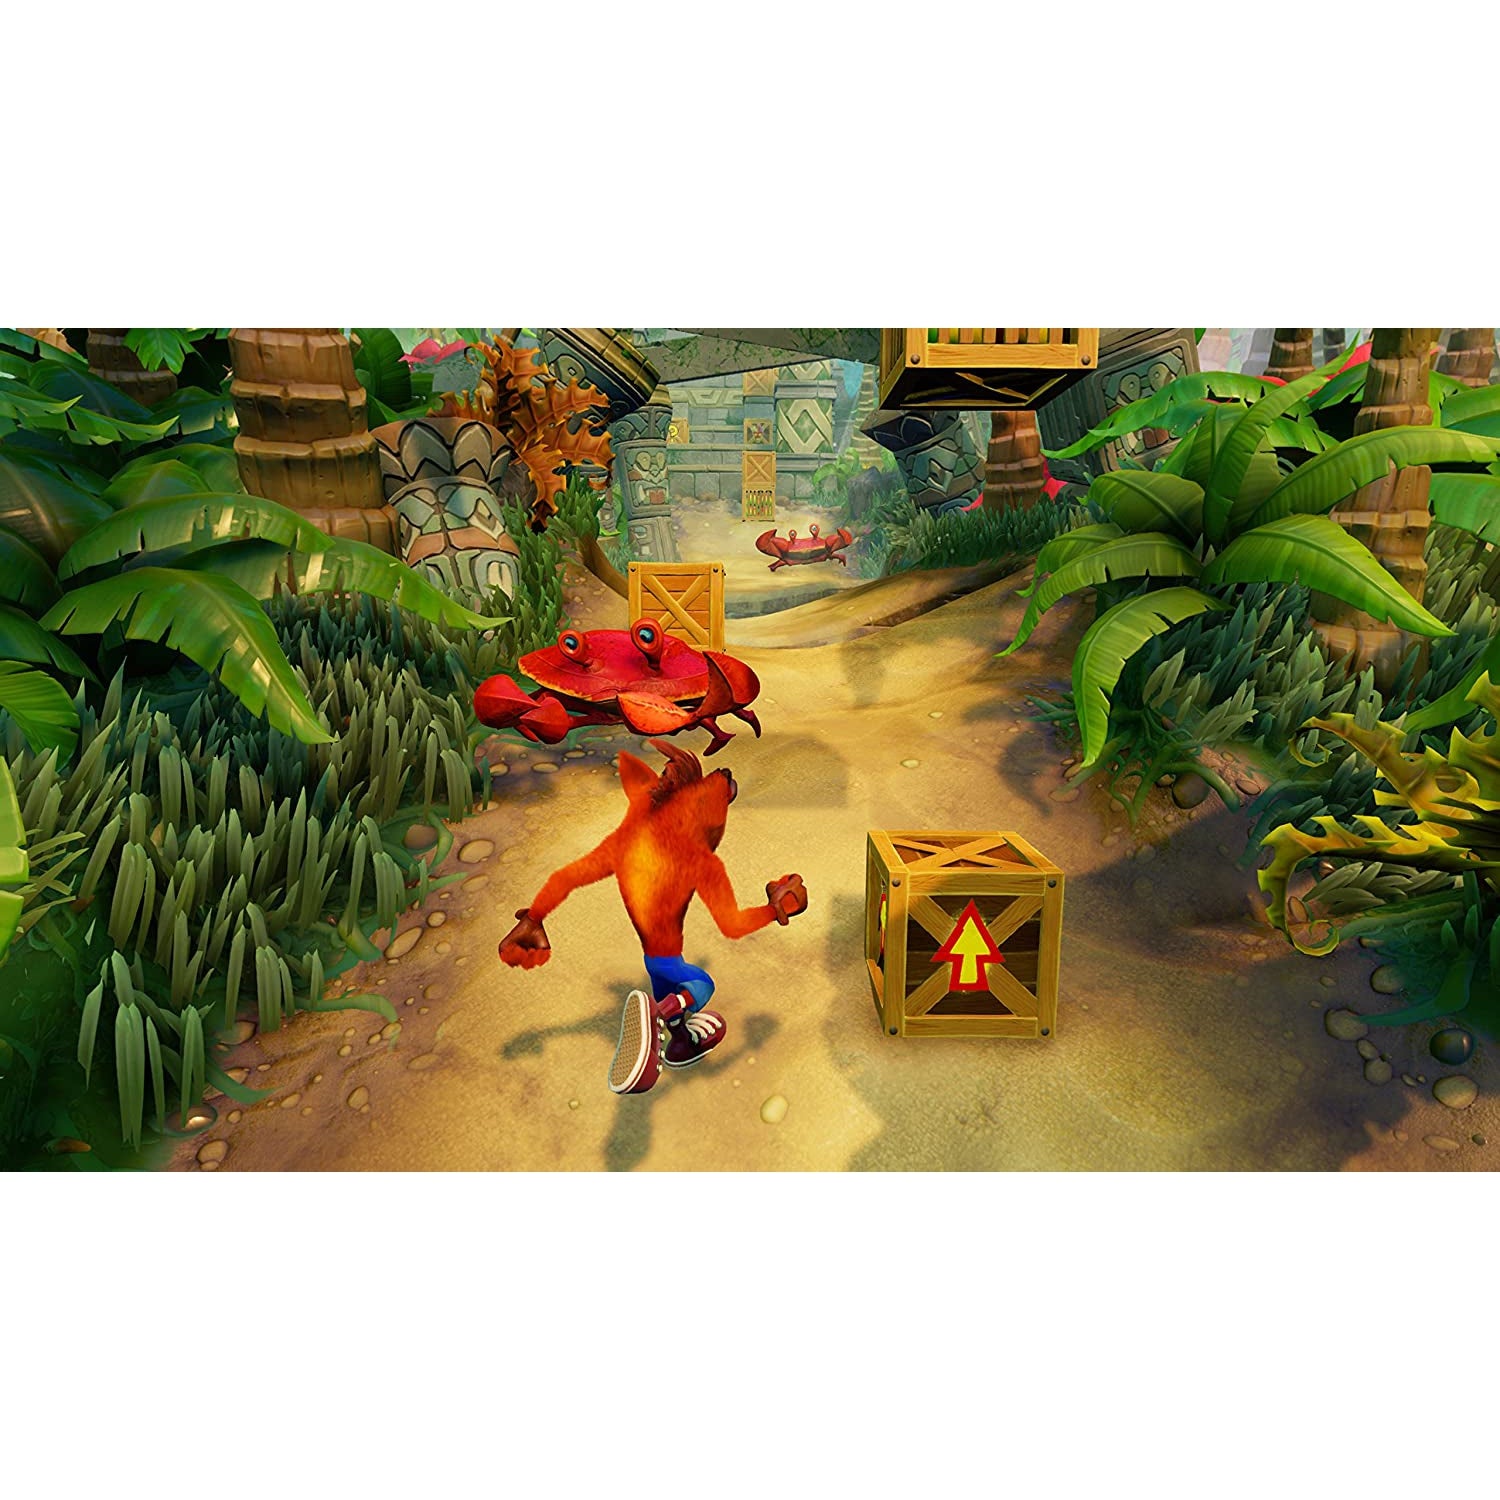 Crash Bandicoot NSane Trilogy (Xbox One)